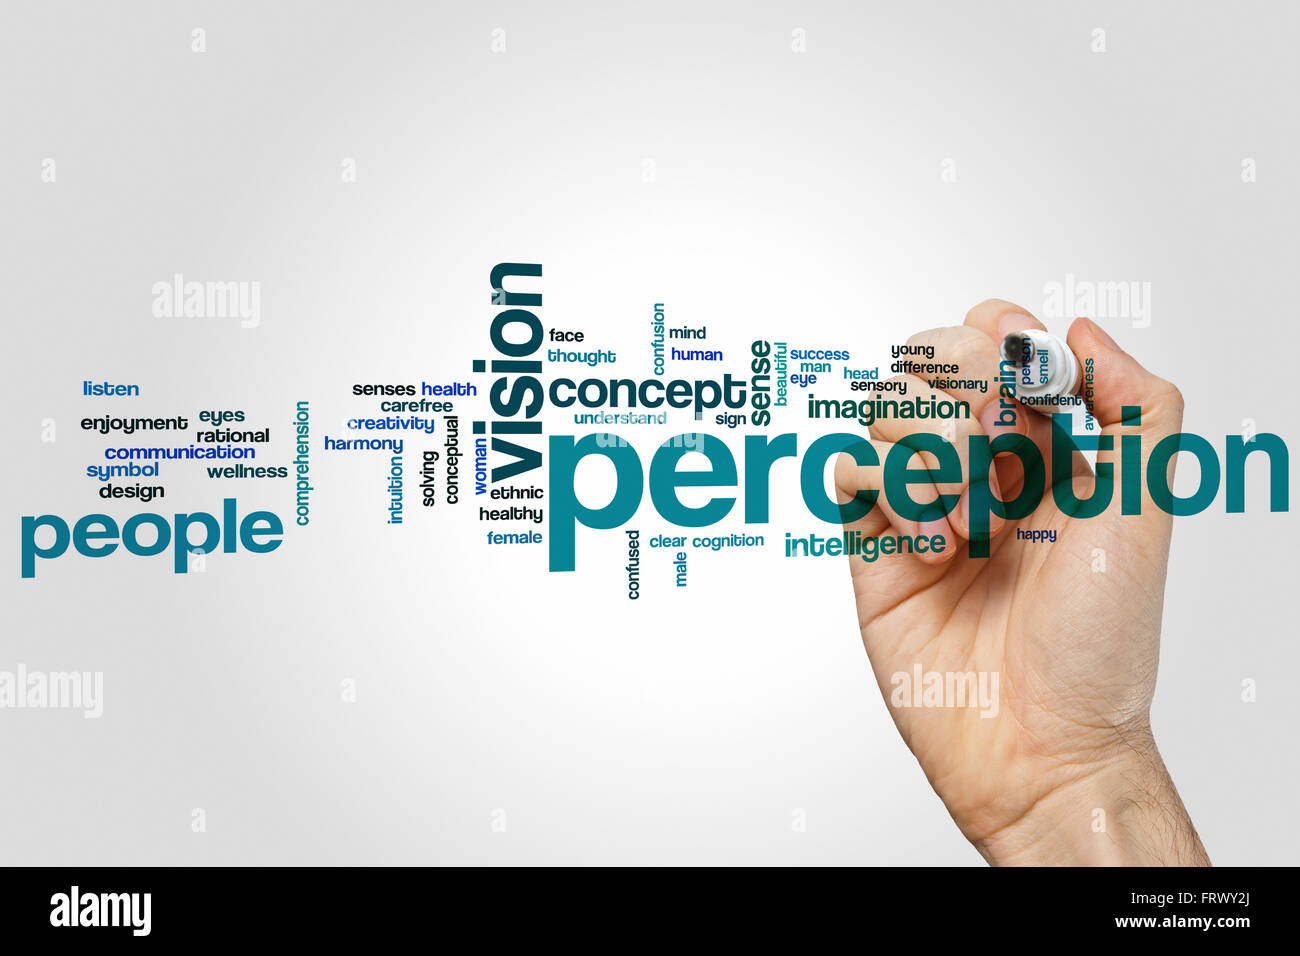 Perception word cloud concept Stock Photo